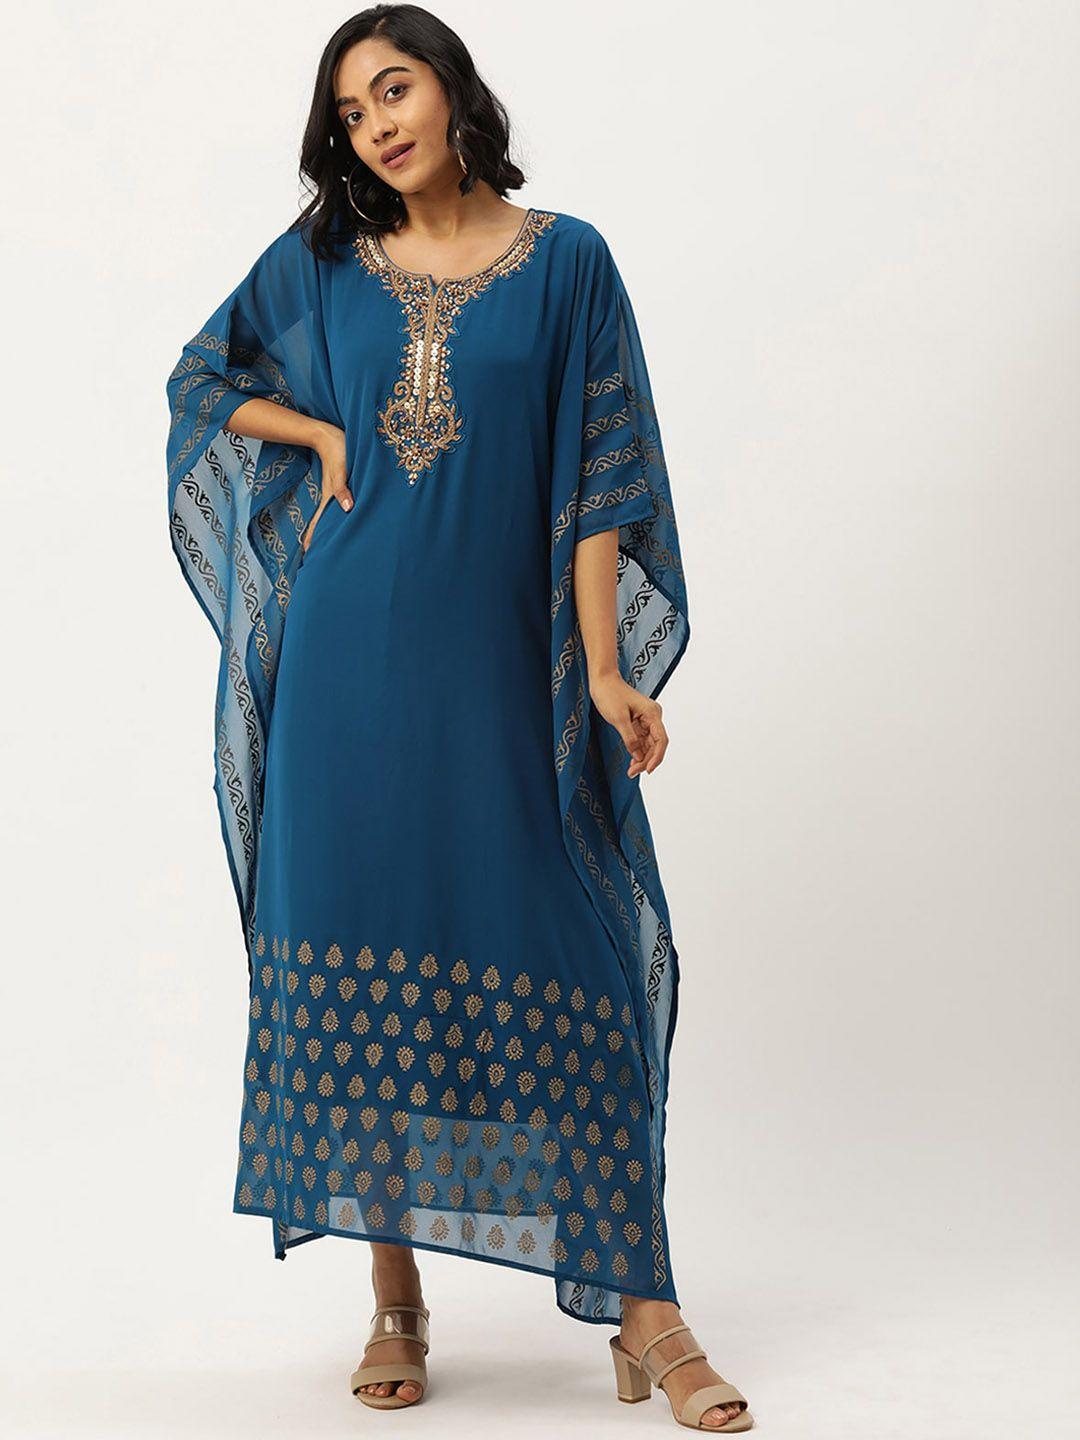 odette women teal ethnic motifs embroidered flared sleeves thread work georgette kurta